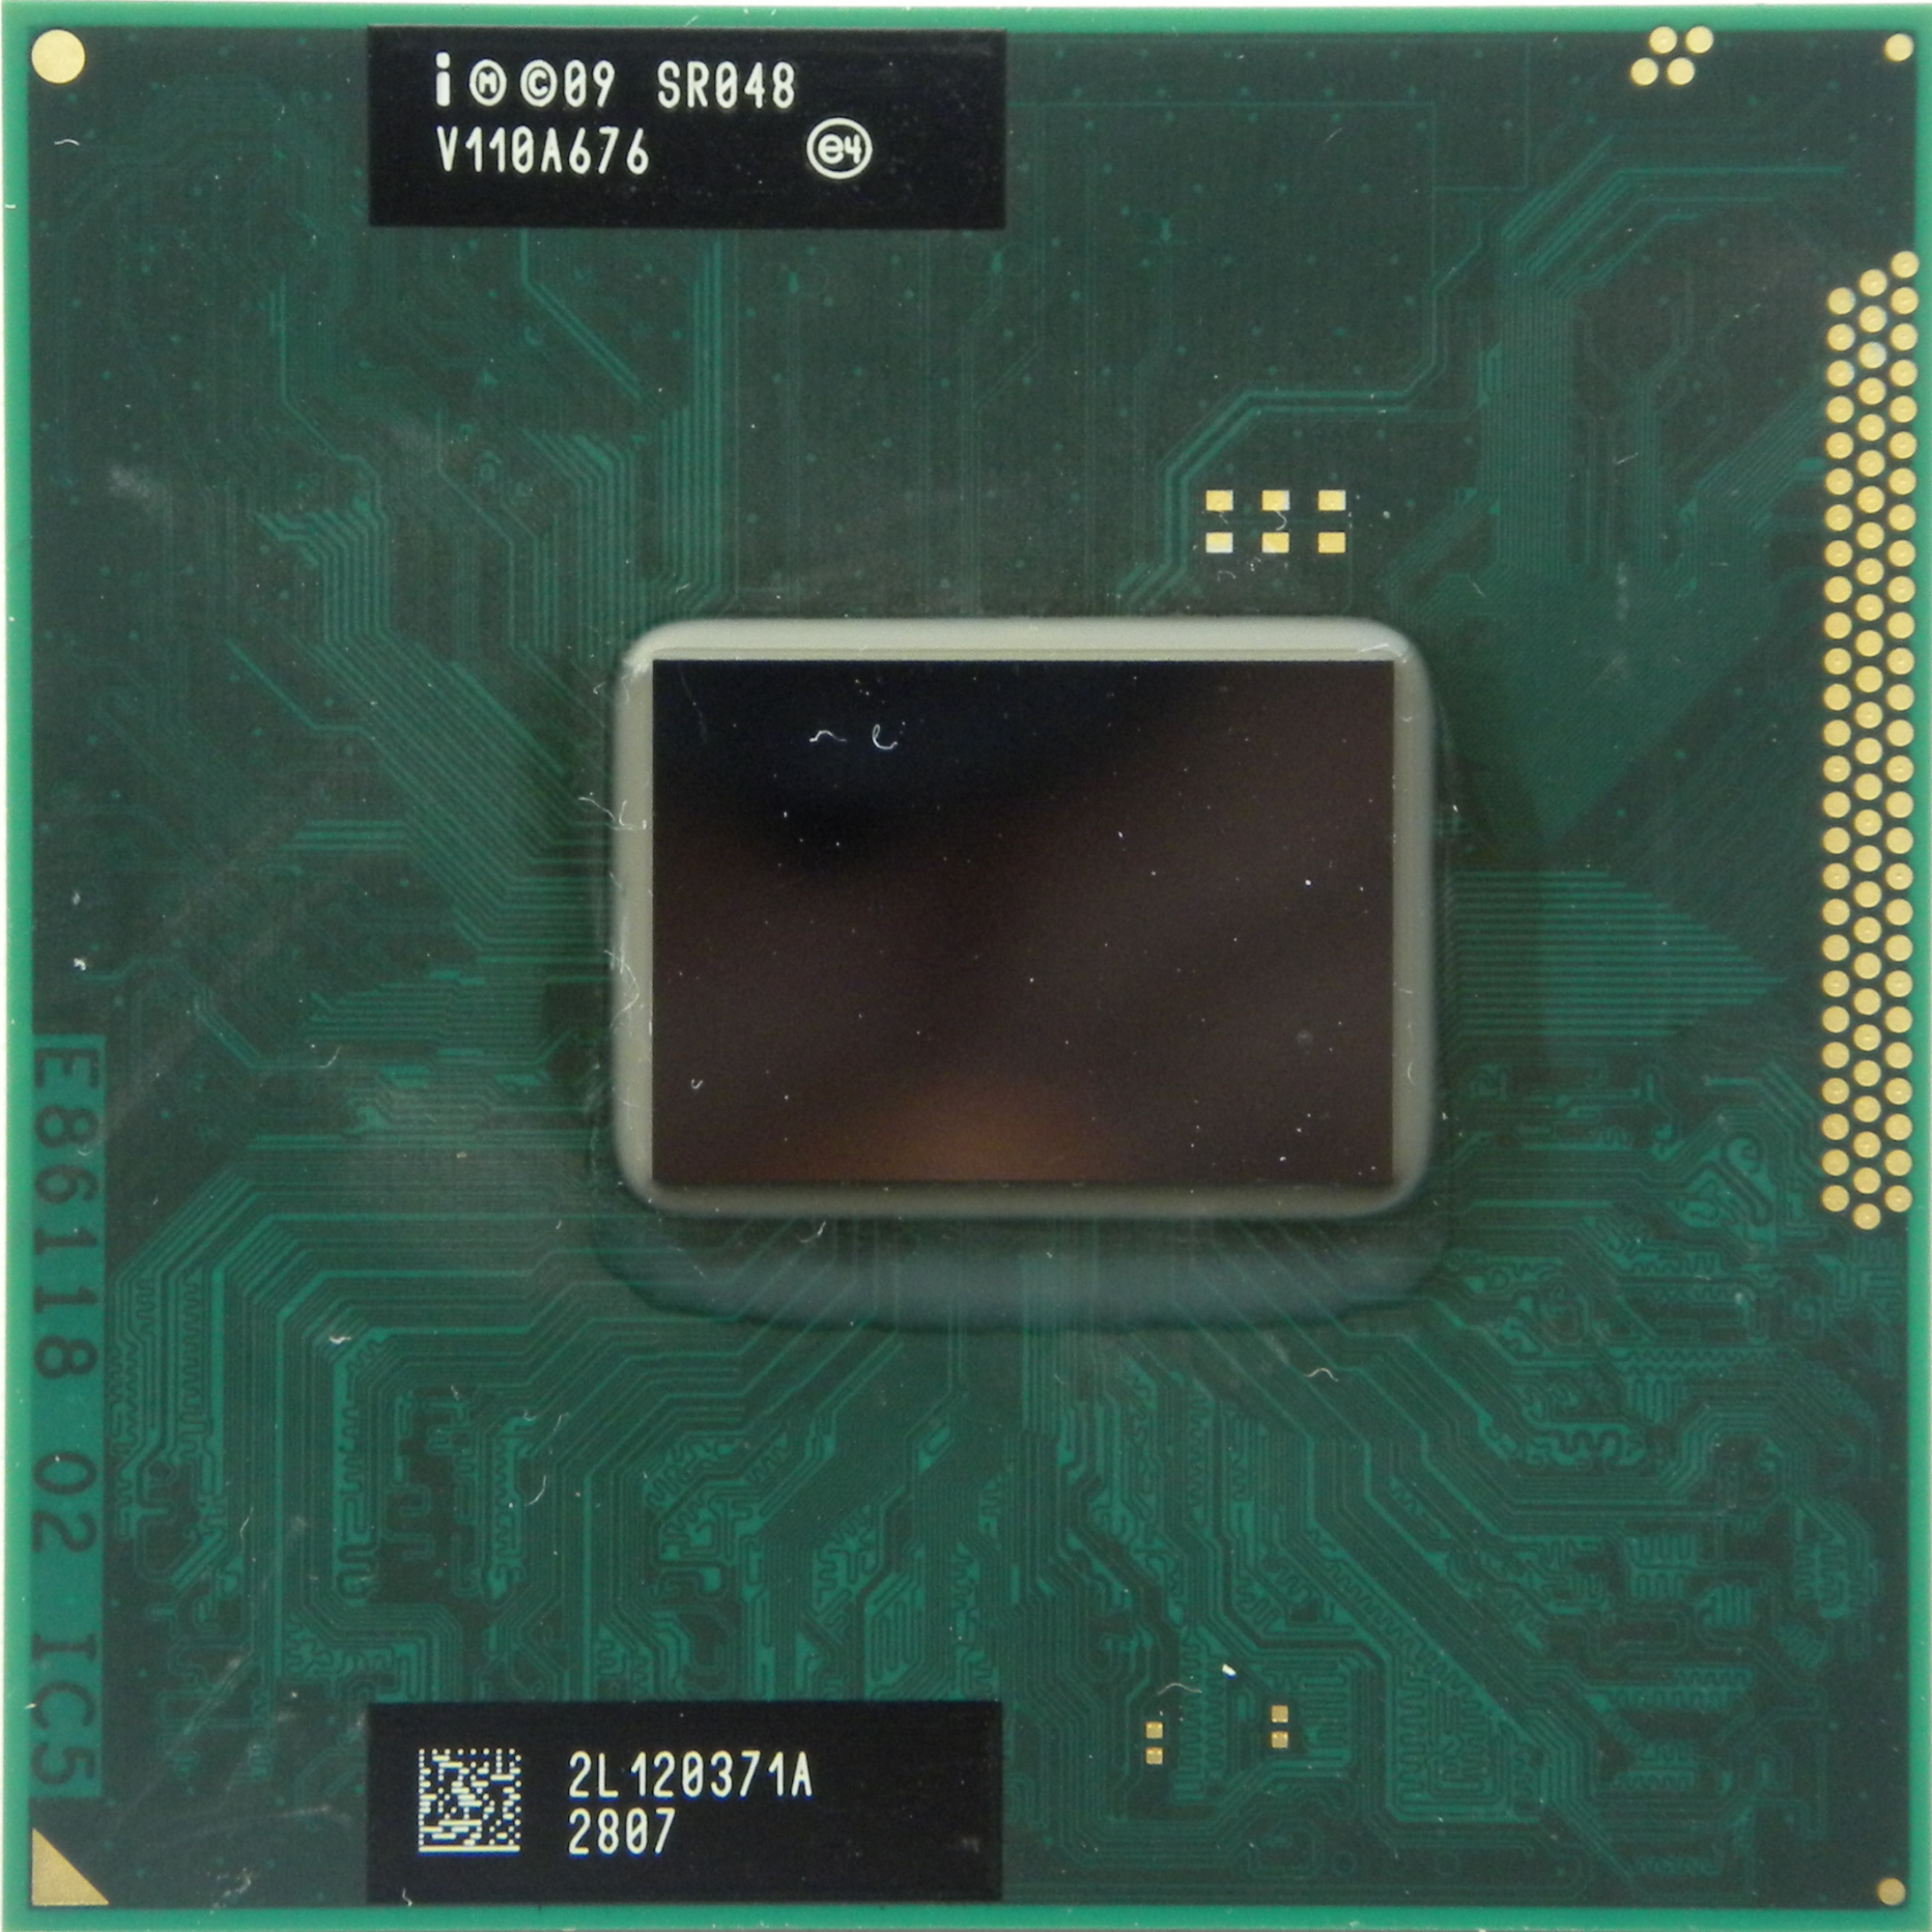 Insanity lose Voting VGA Legacy MKIII - Intel HD Graphics 3000 (Sandy Bridge)